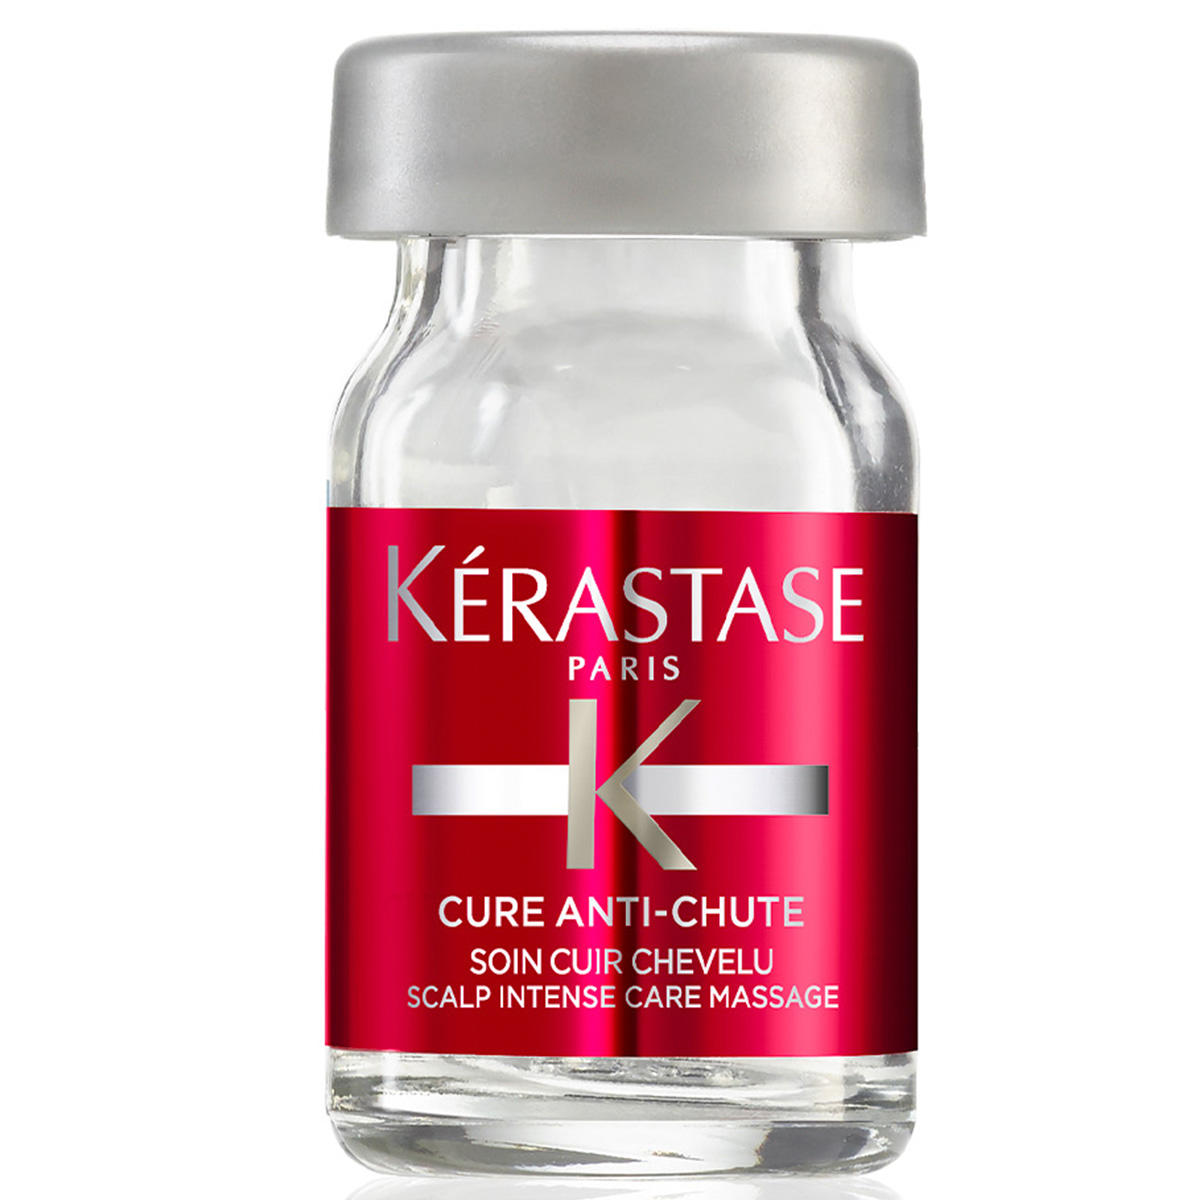 Kérastase Spécifique Cure Anti-Chute Package with 42 x 6 ml - 1